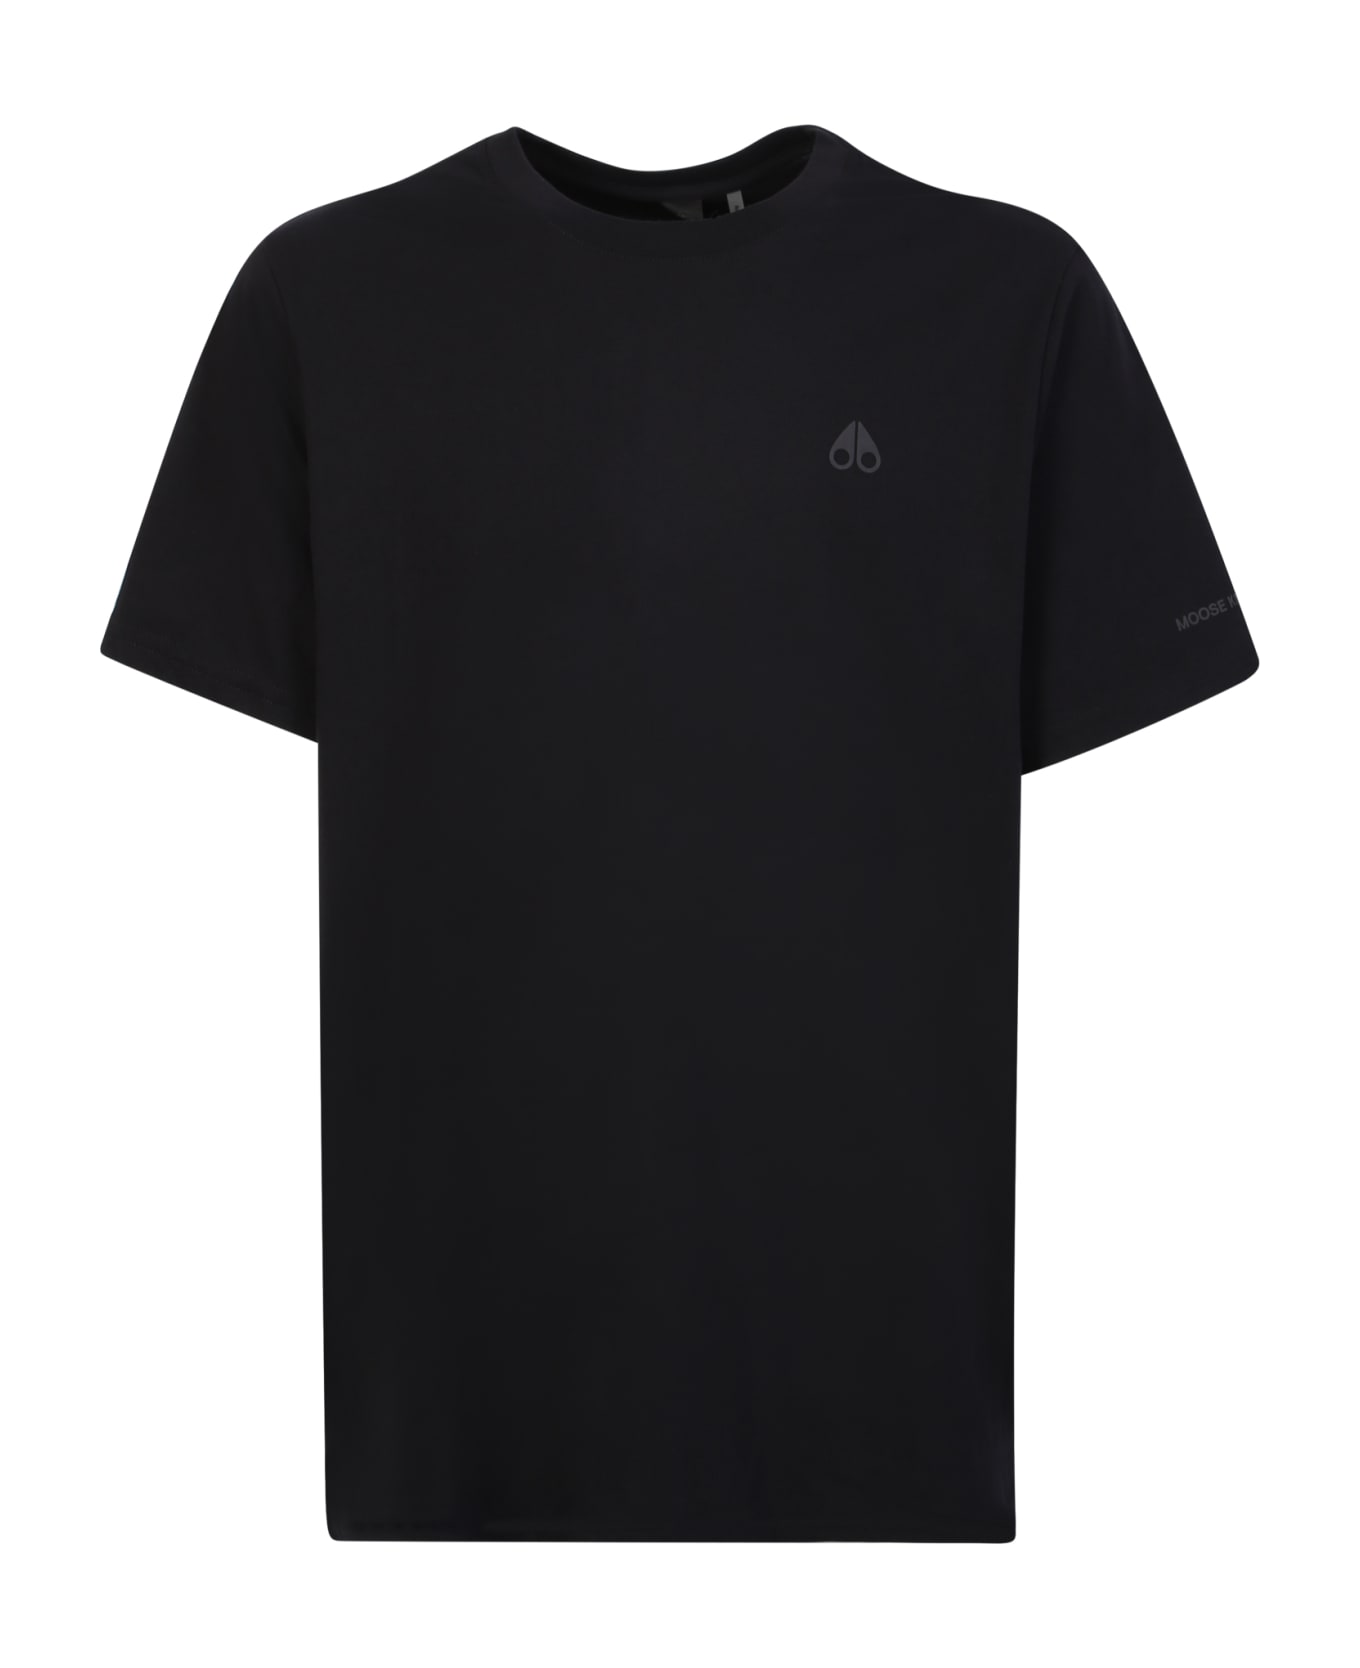 Moose Knuckles Black Satellite T-shirt - Black